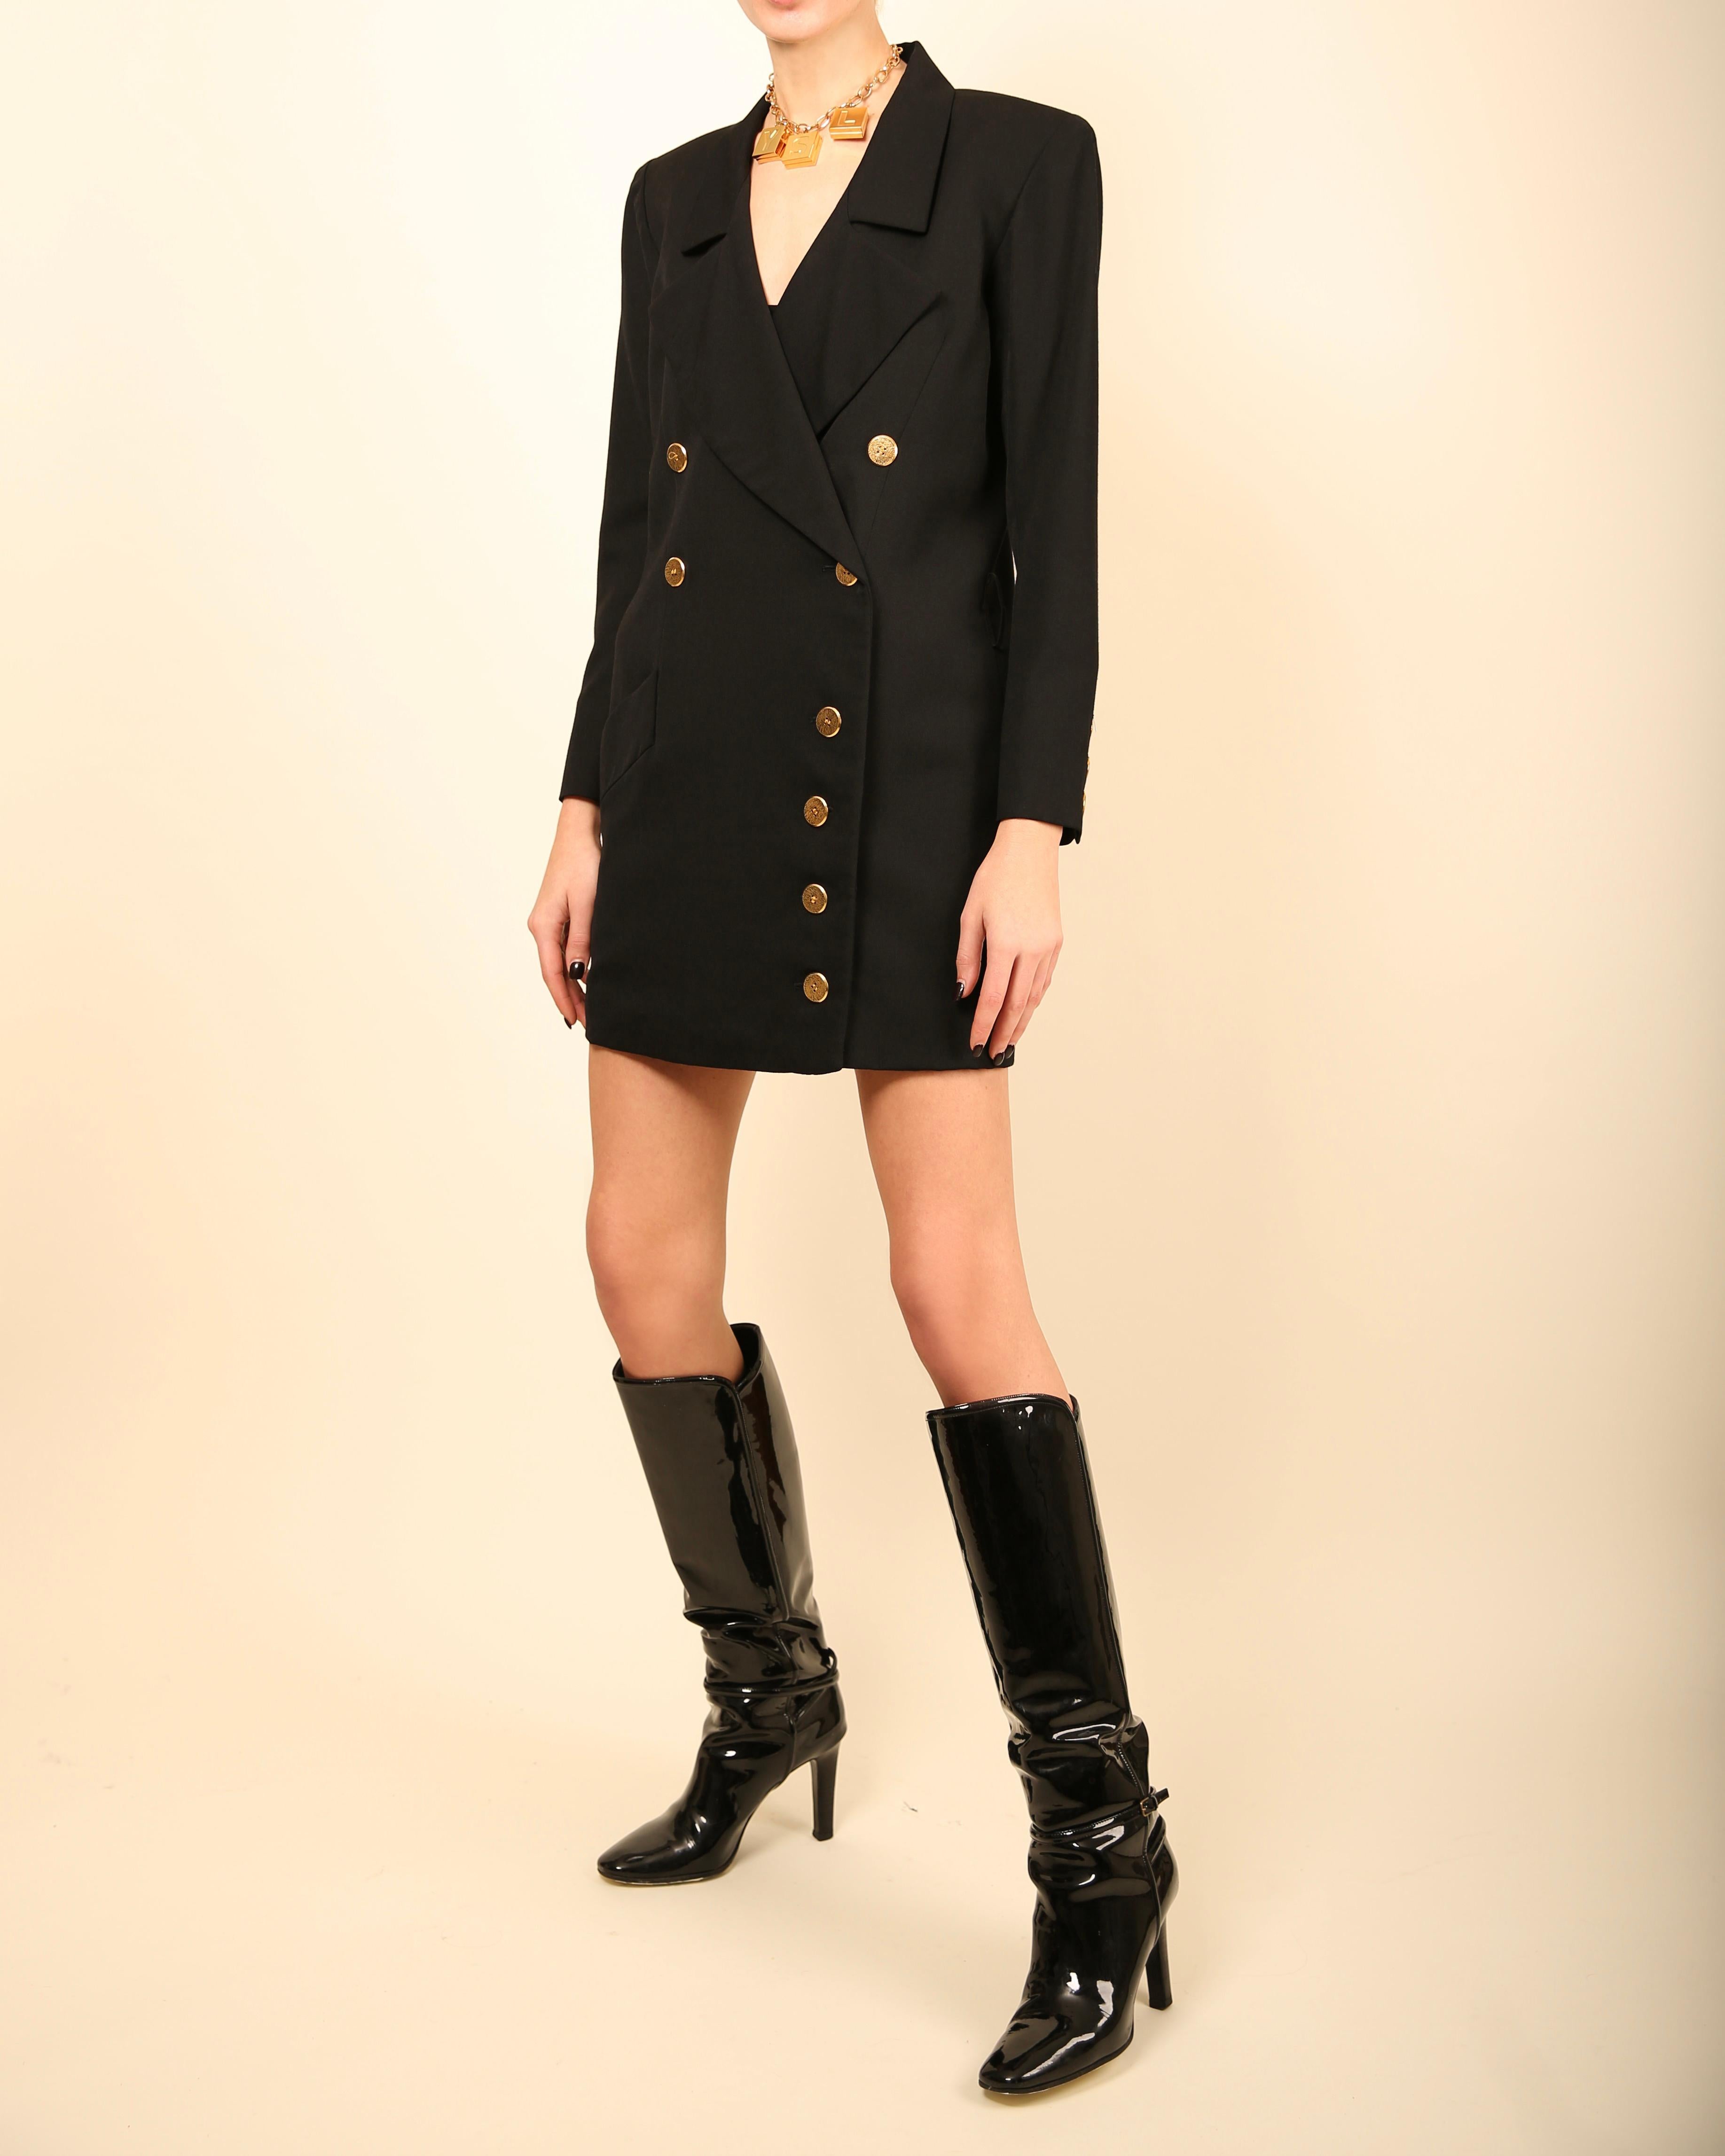 Yves Saint Laurent Rive Gauche vintage black wool oversized blazer dress jacket 6